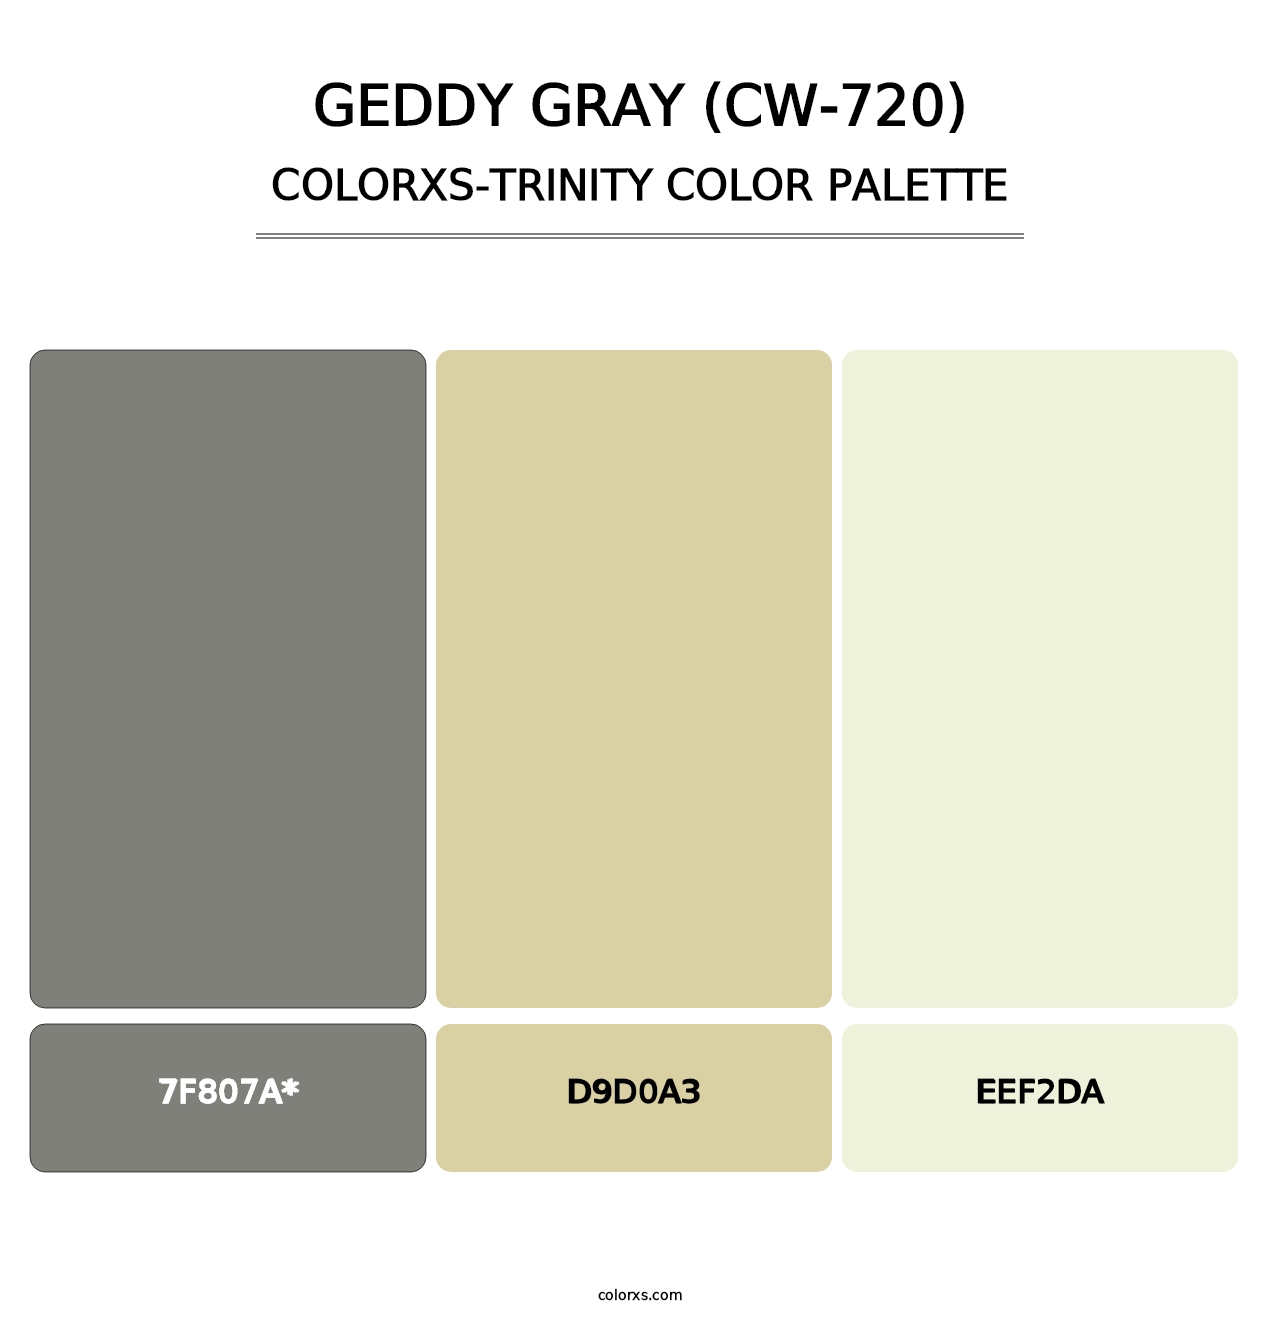 Geddy Gray (CW-720) - Colorxs Trinity Palette